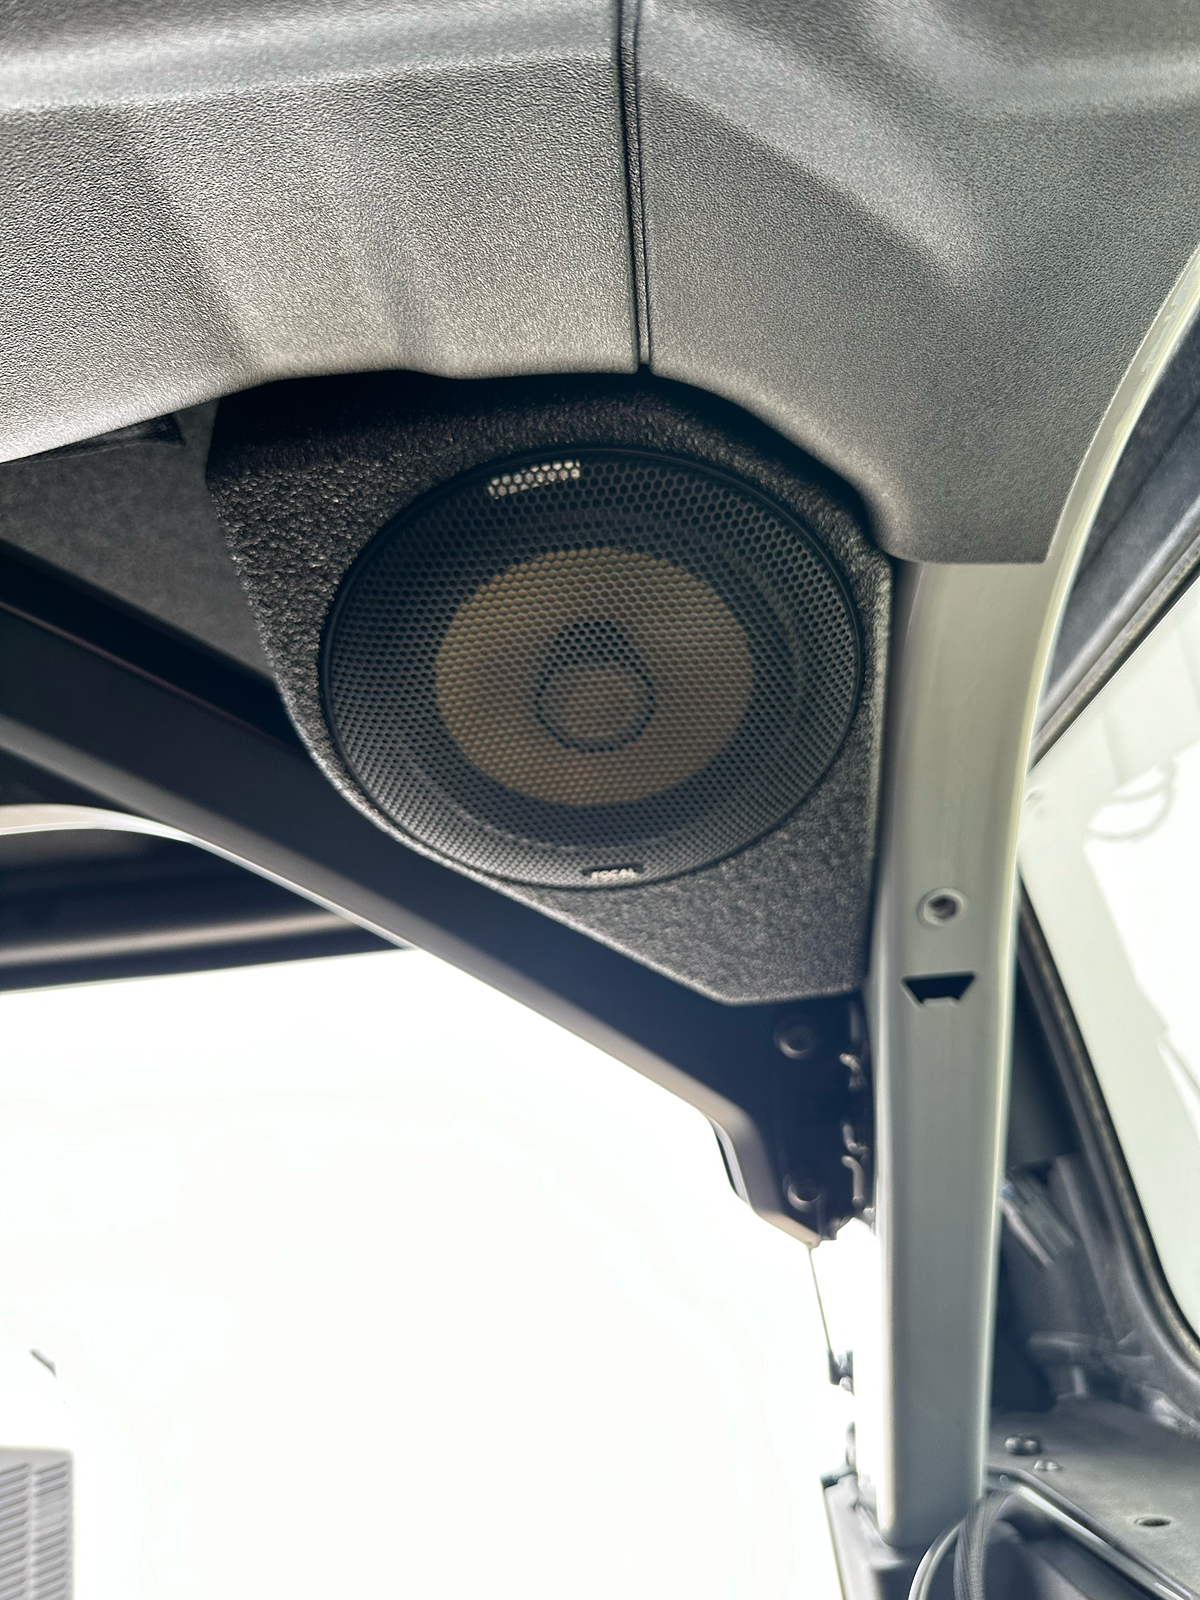 Ford Bronco Dream stereo system upgrade build in Bronco Raptor IMG-2267